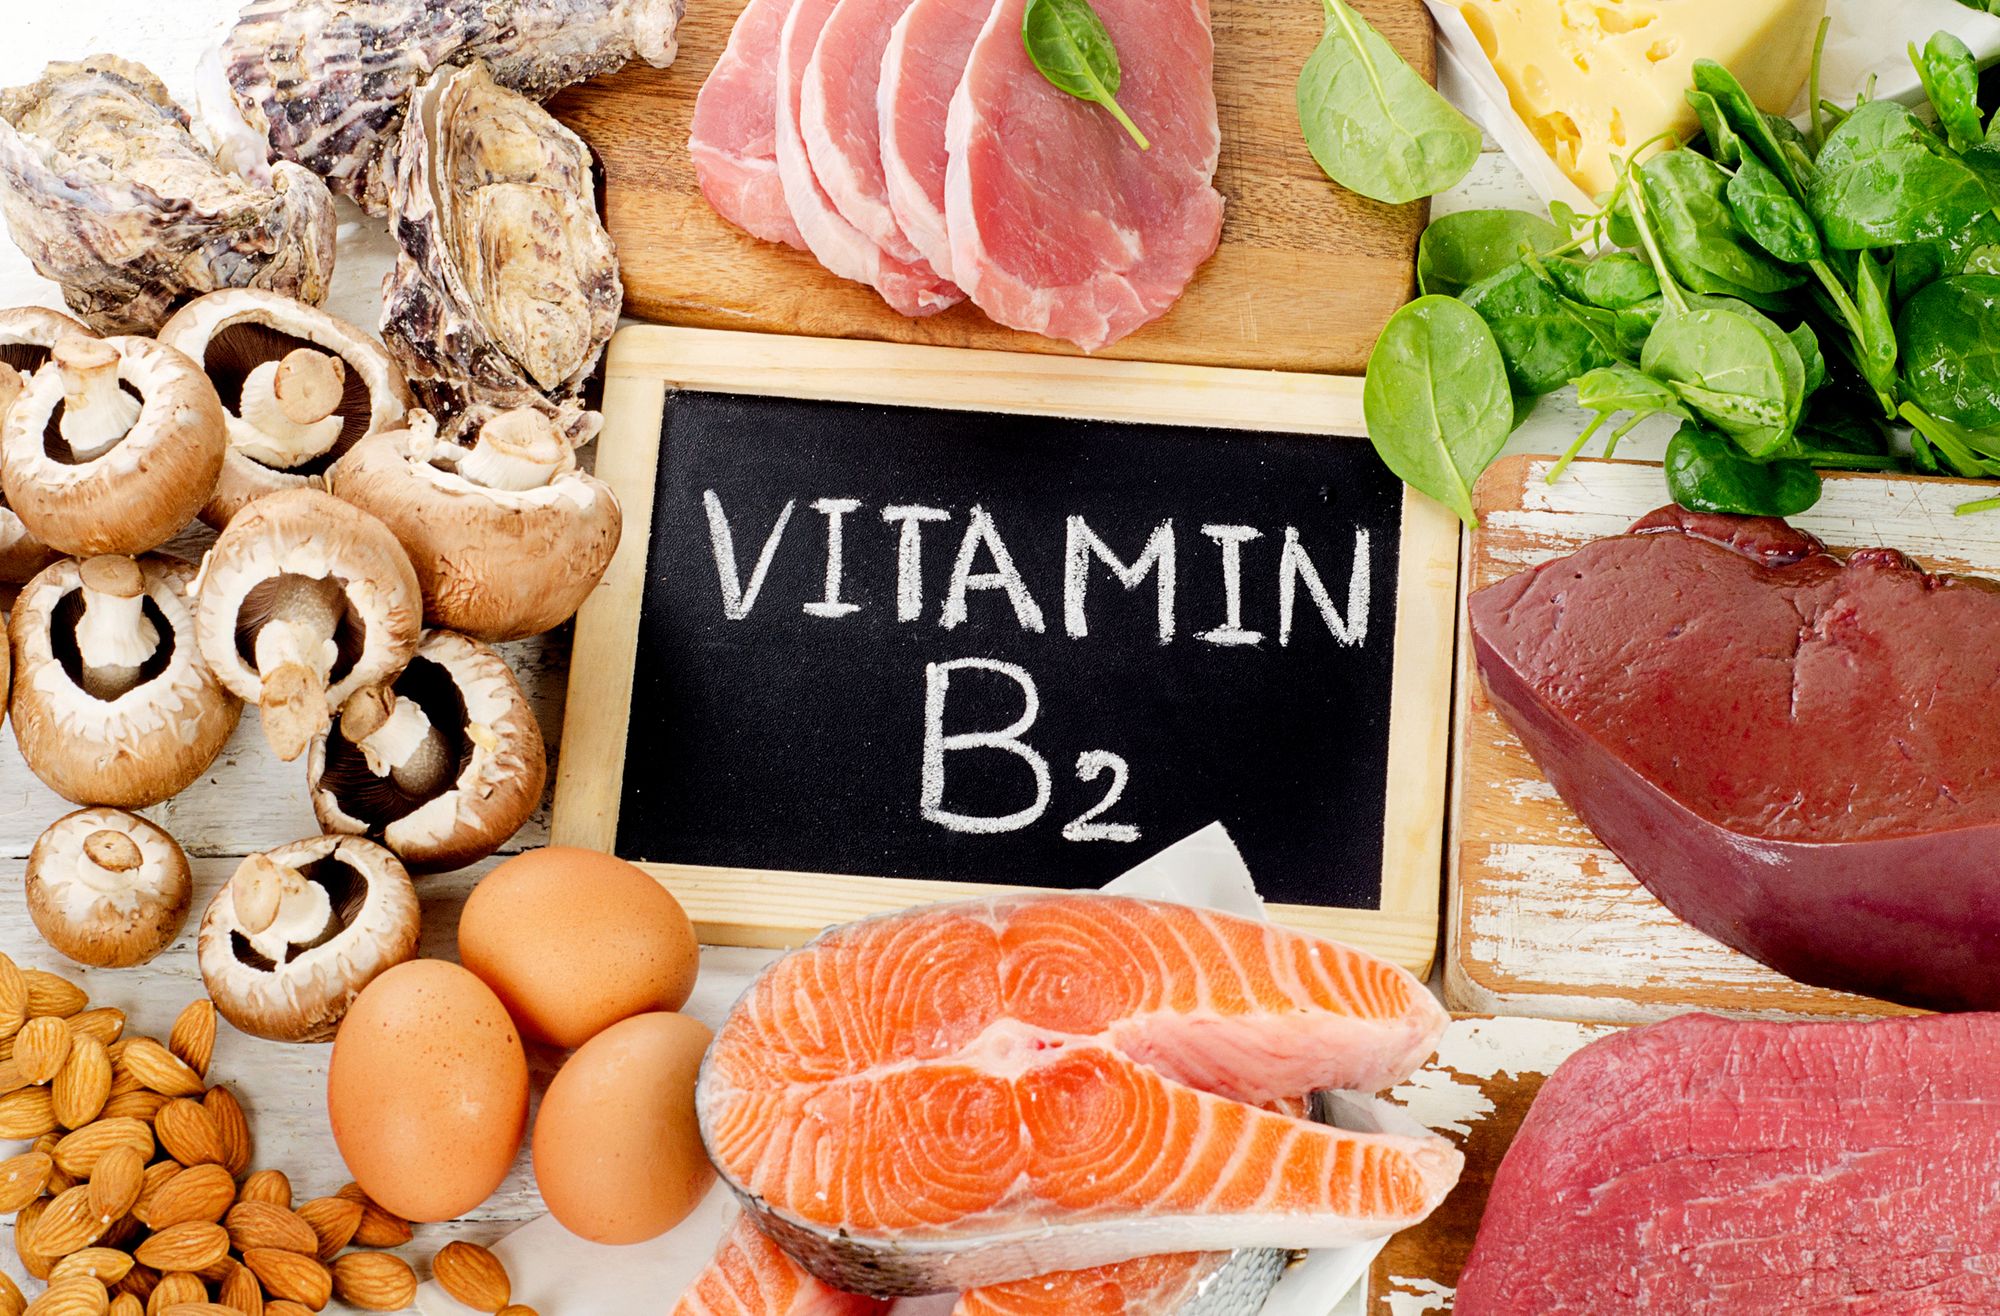 Vitamin v. Витамин б2 рибофлавин. Витамины группы b2. Рибофлавин, или витамин в2. Витамин в6 рибофлавин.